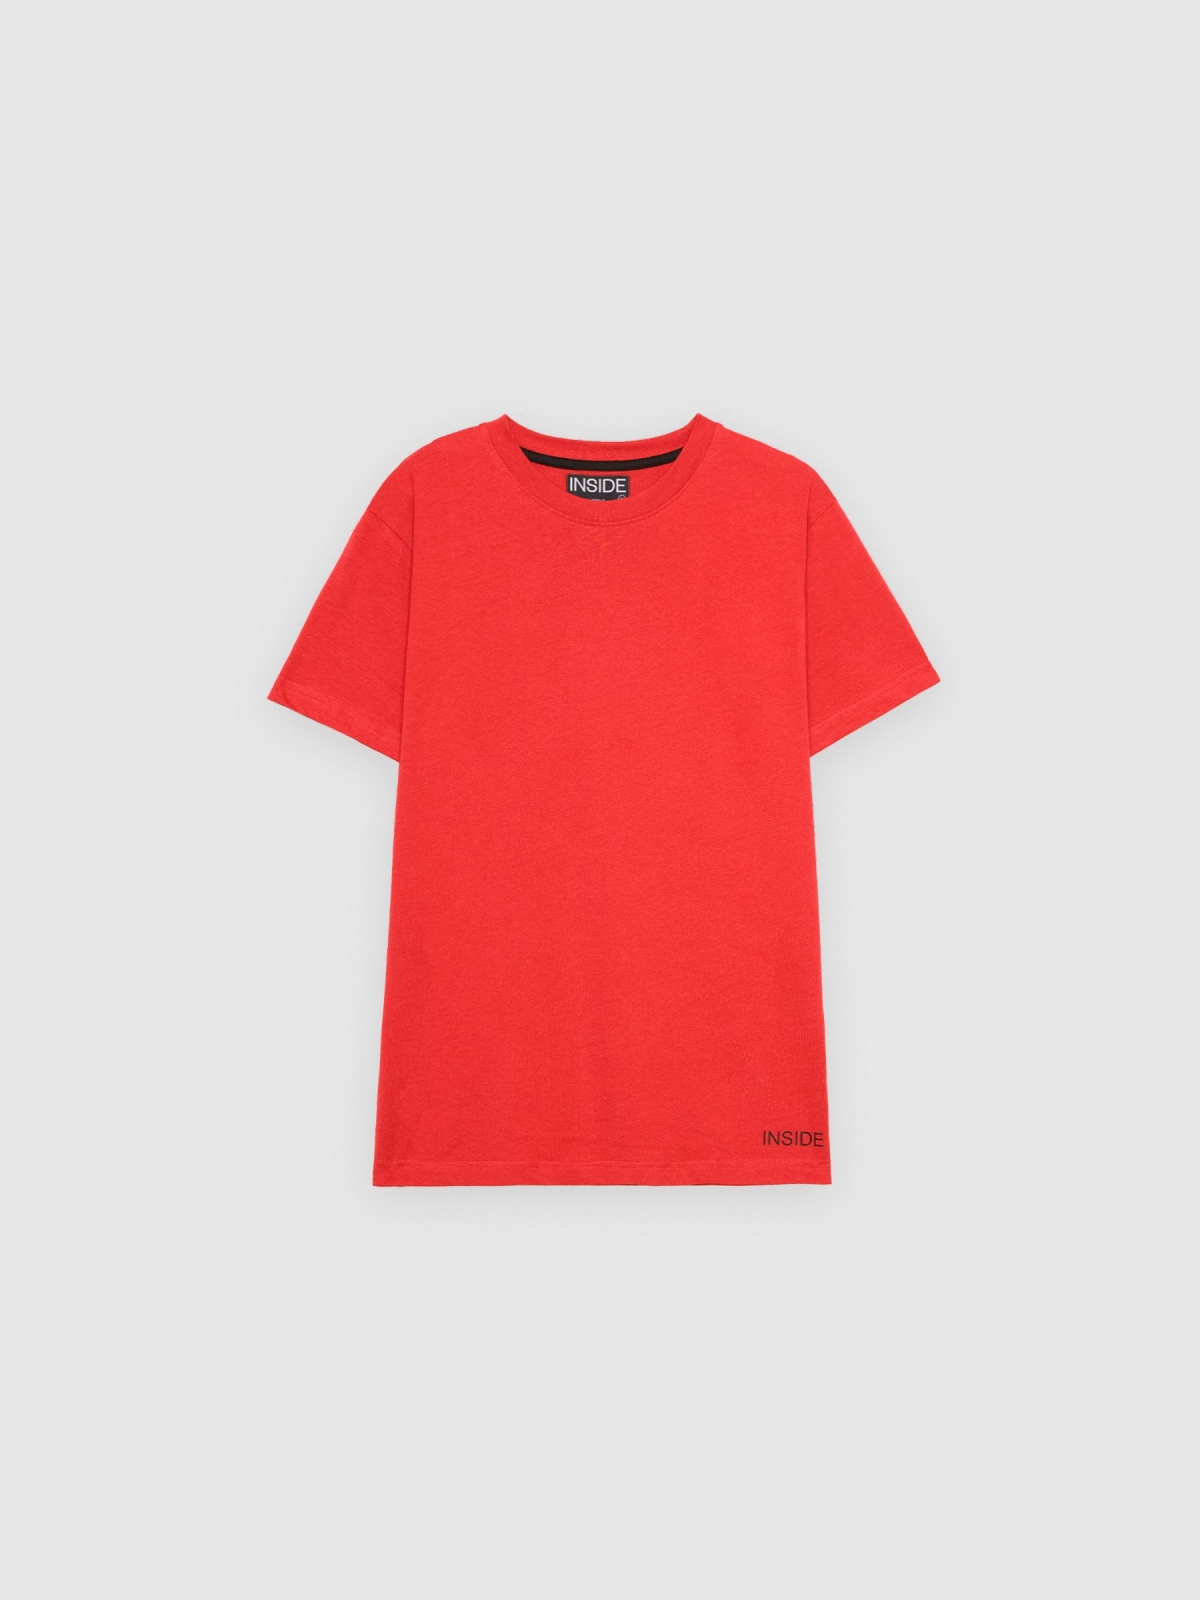  Camiseta básica manga corta rojo